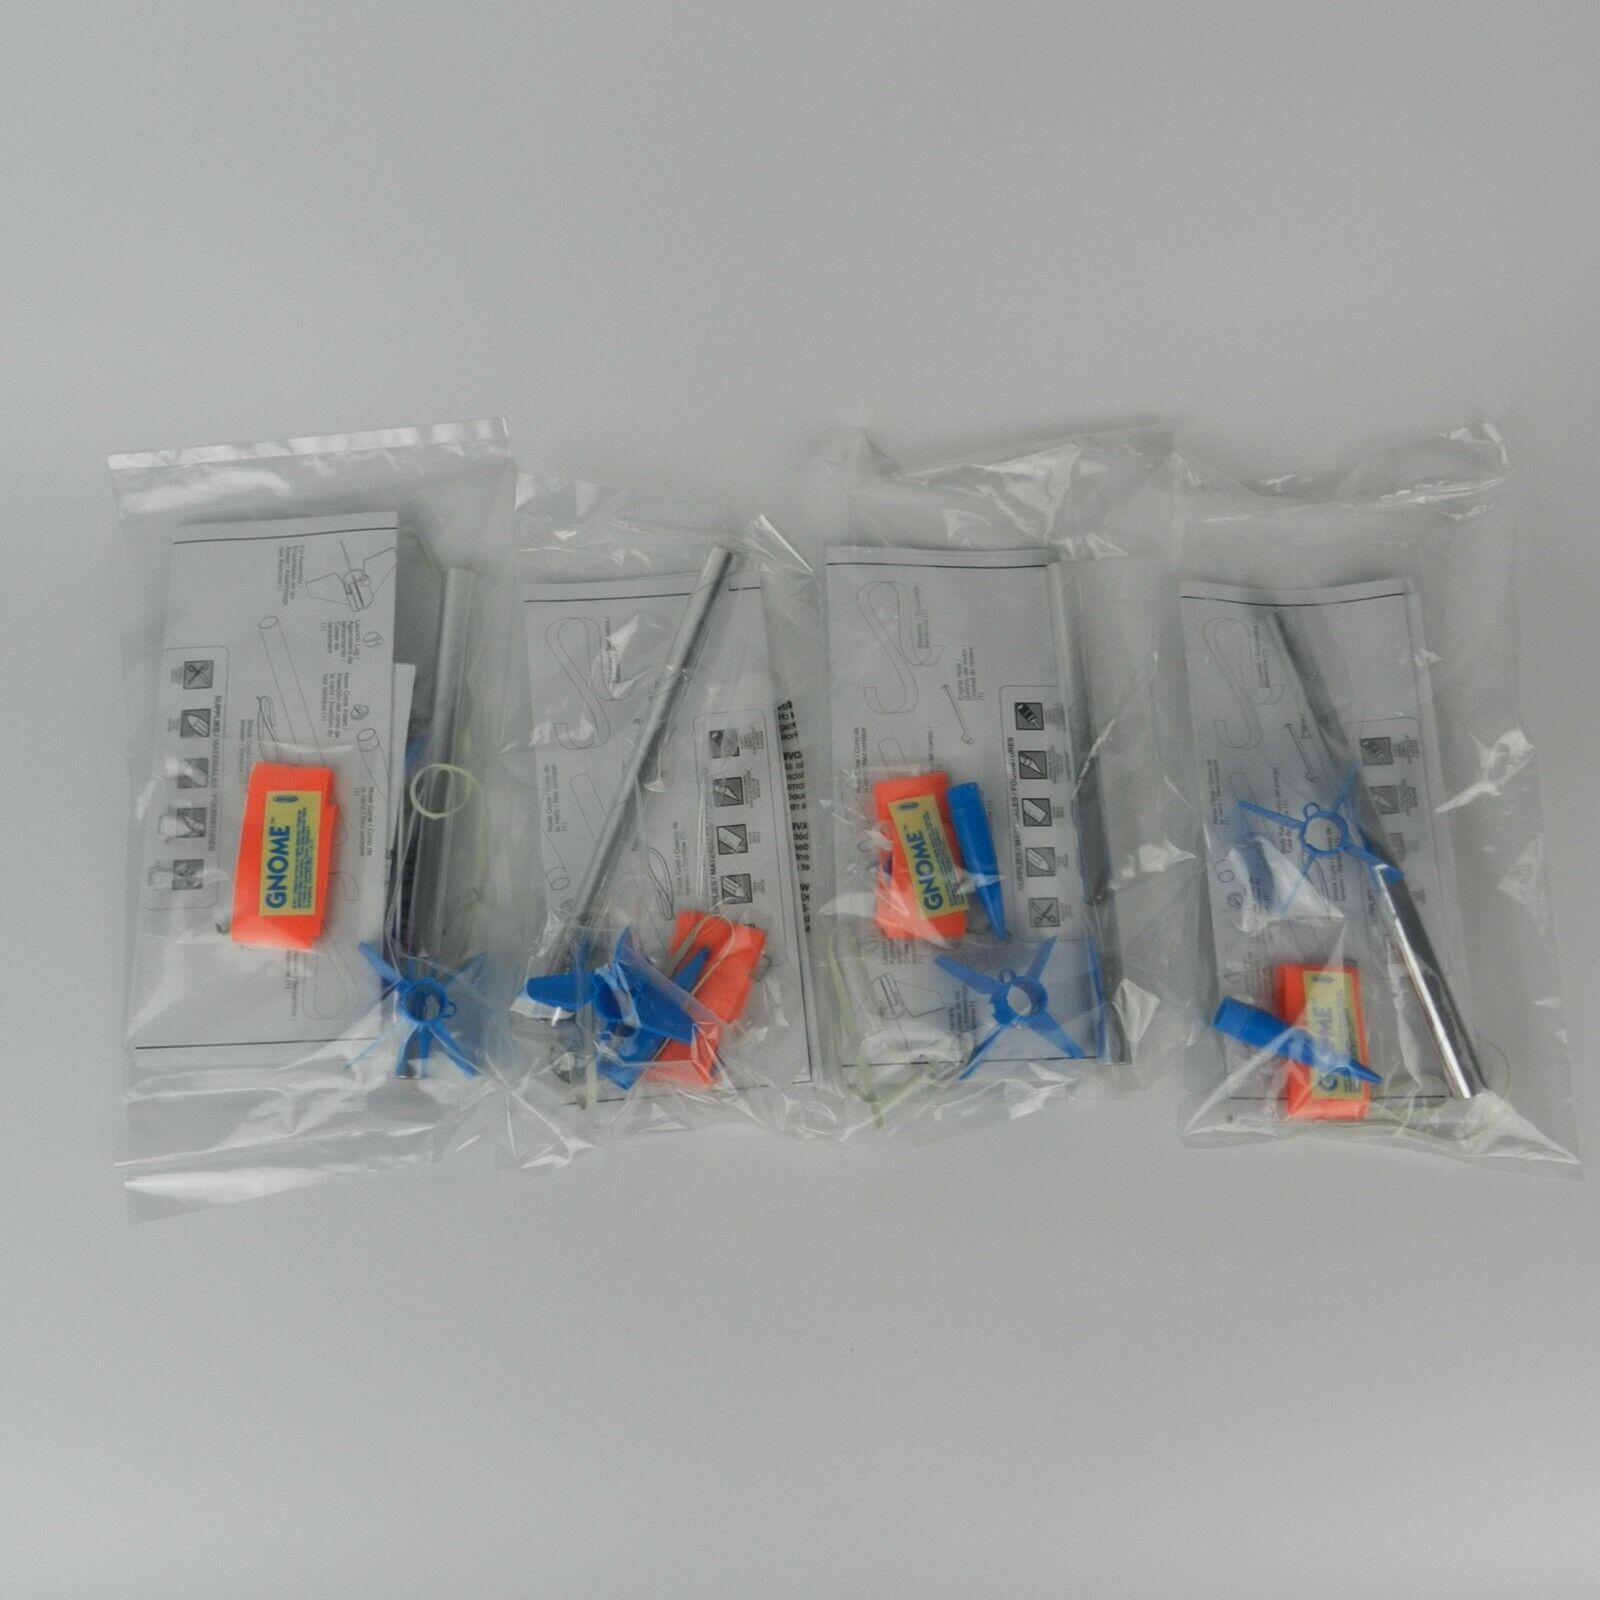 Set of 4 Estes Gnome Beginner Model Rockets #0886 w/ Instructions New Sealed Estes 0886